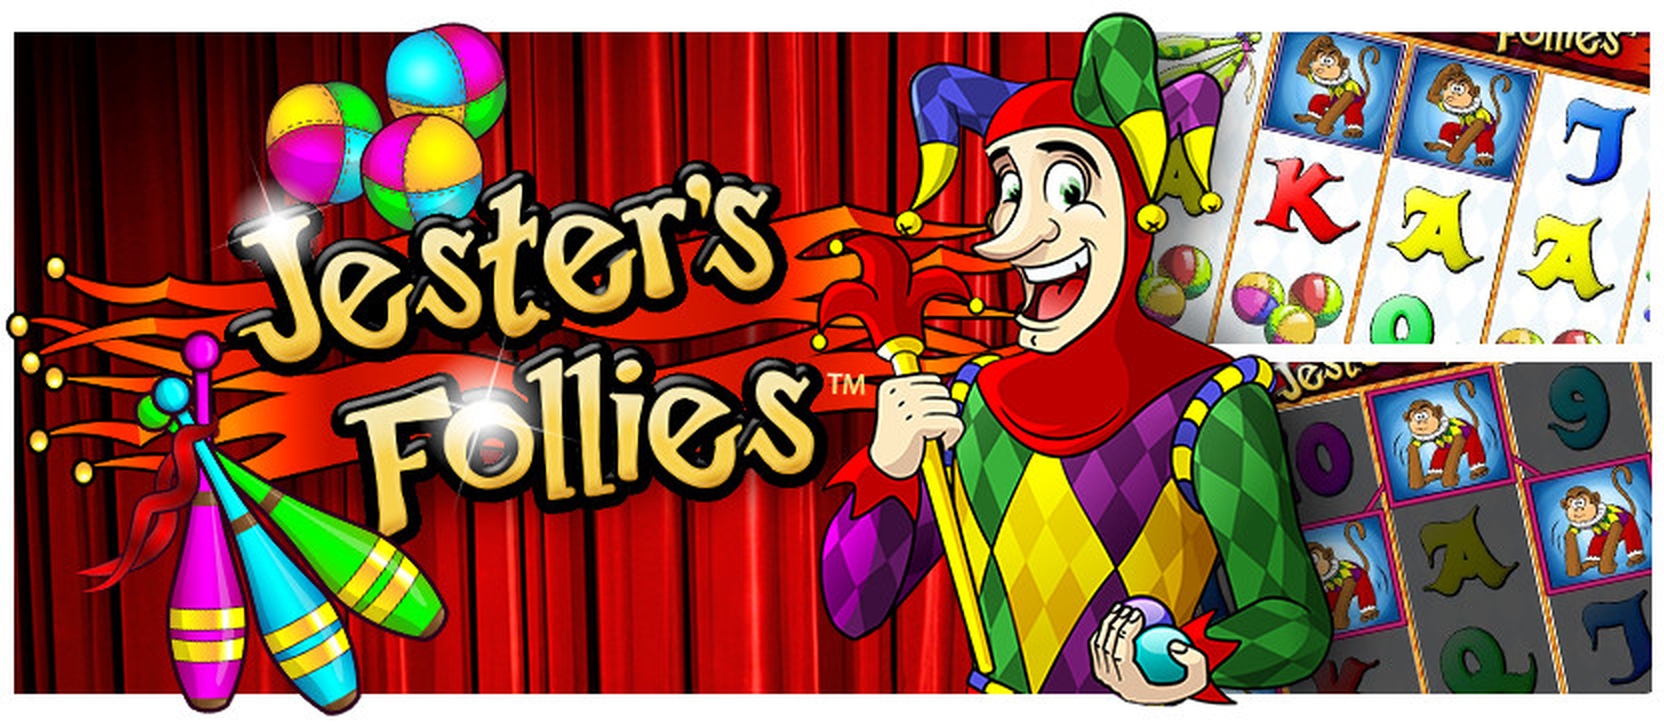 Jester's Follies demo